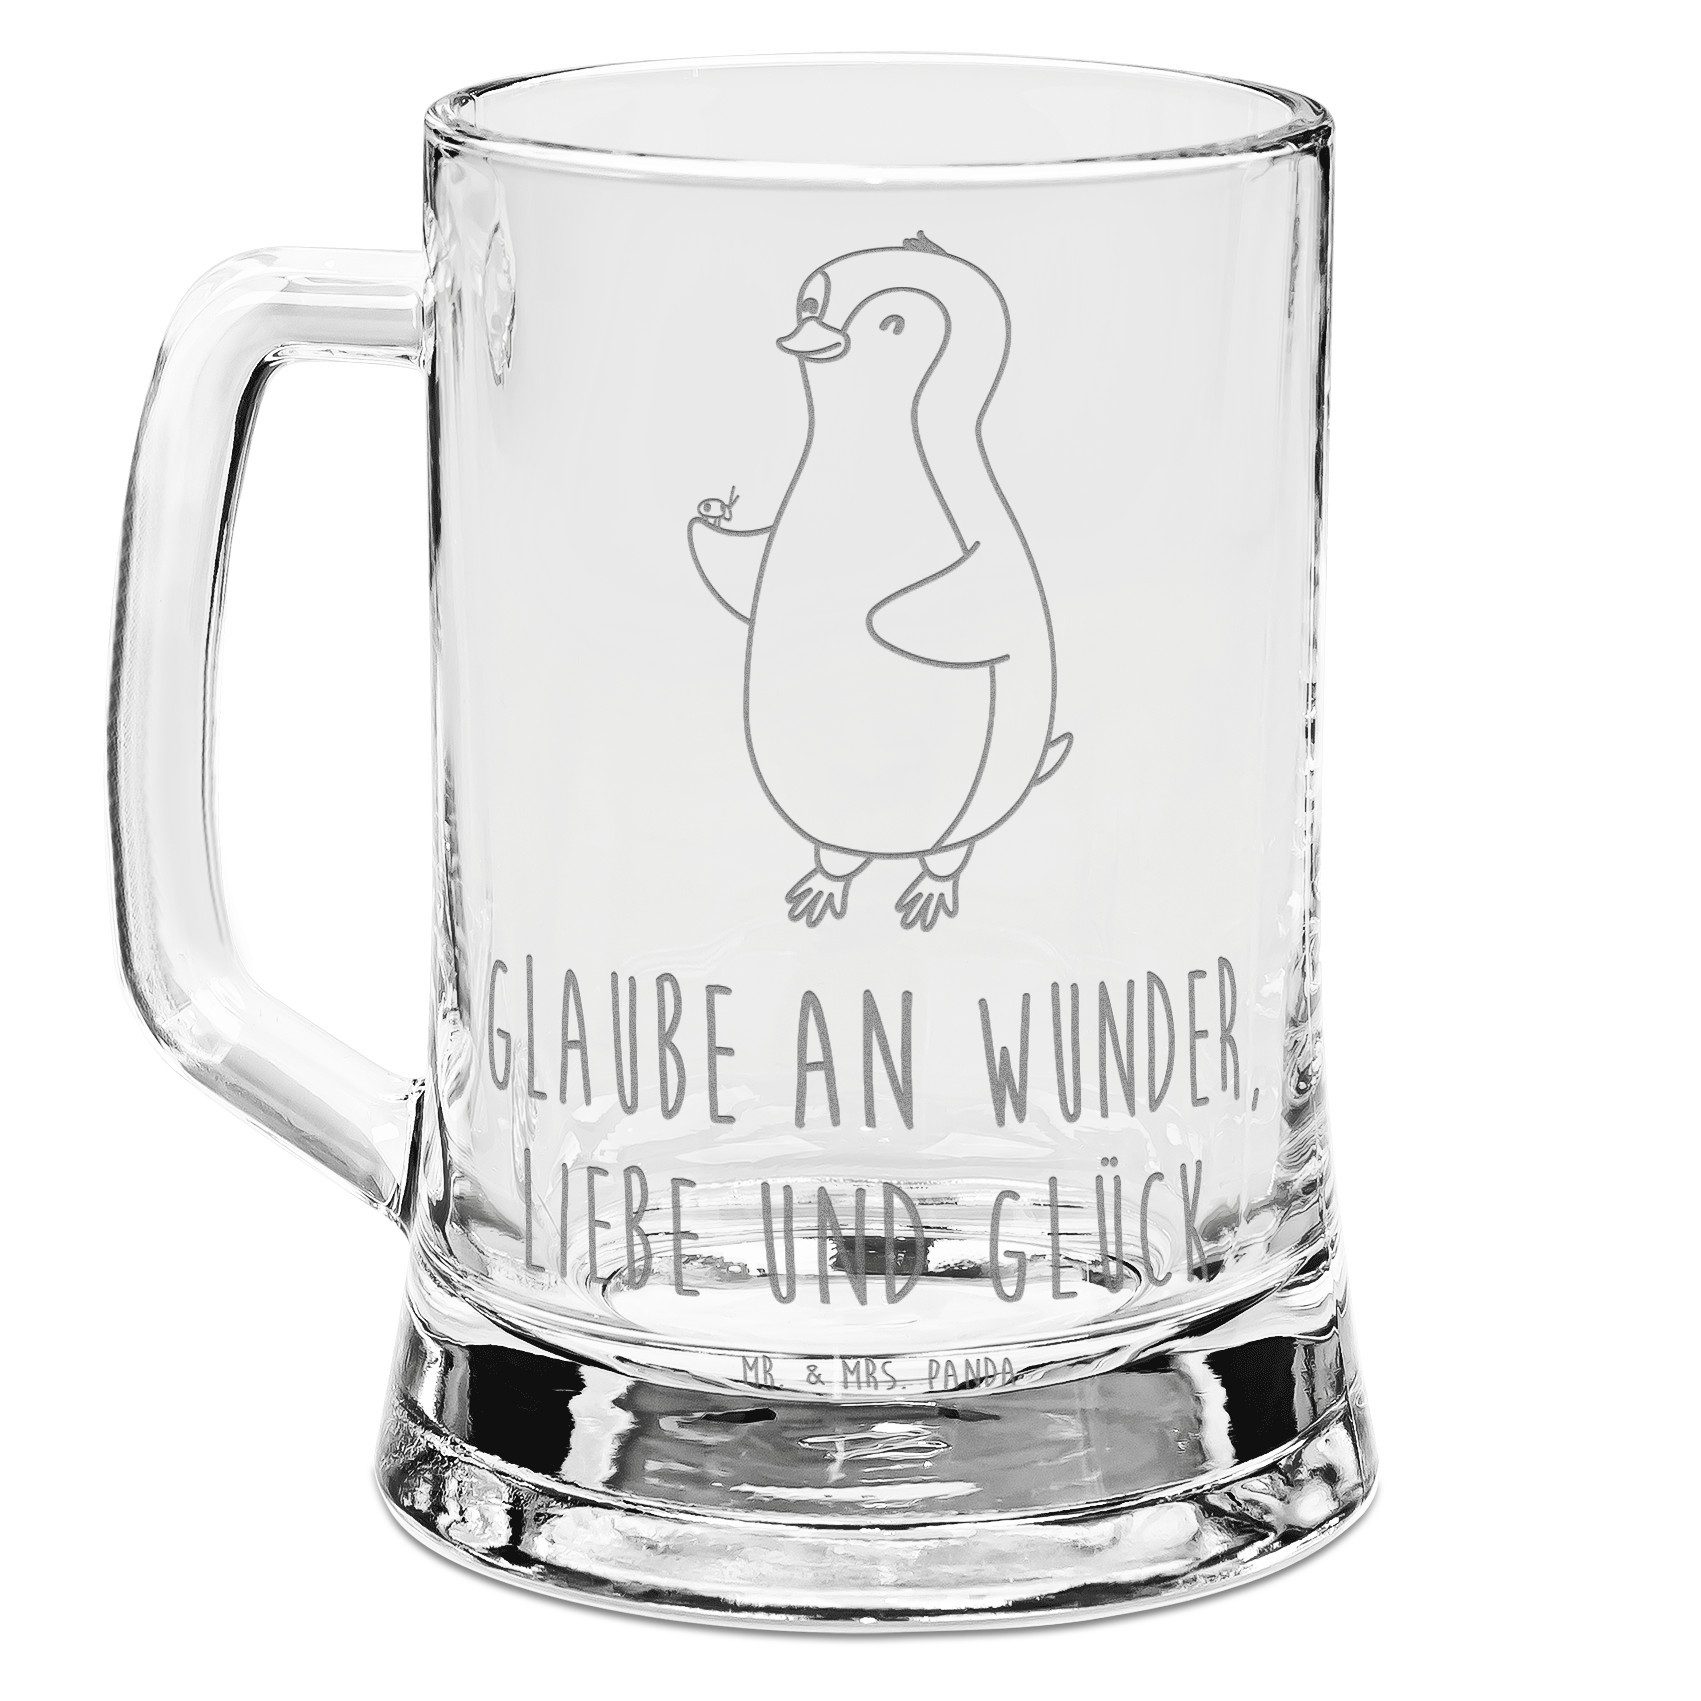 Mr. & Mrs. Panda Bierkrug Pinguin Marienkäfer - Transparent - Geschenk, Bierkrug, Bier Krug, Gl, Premium Glas, Elegantes Design